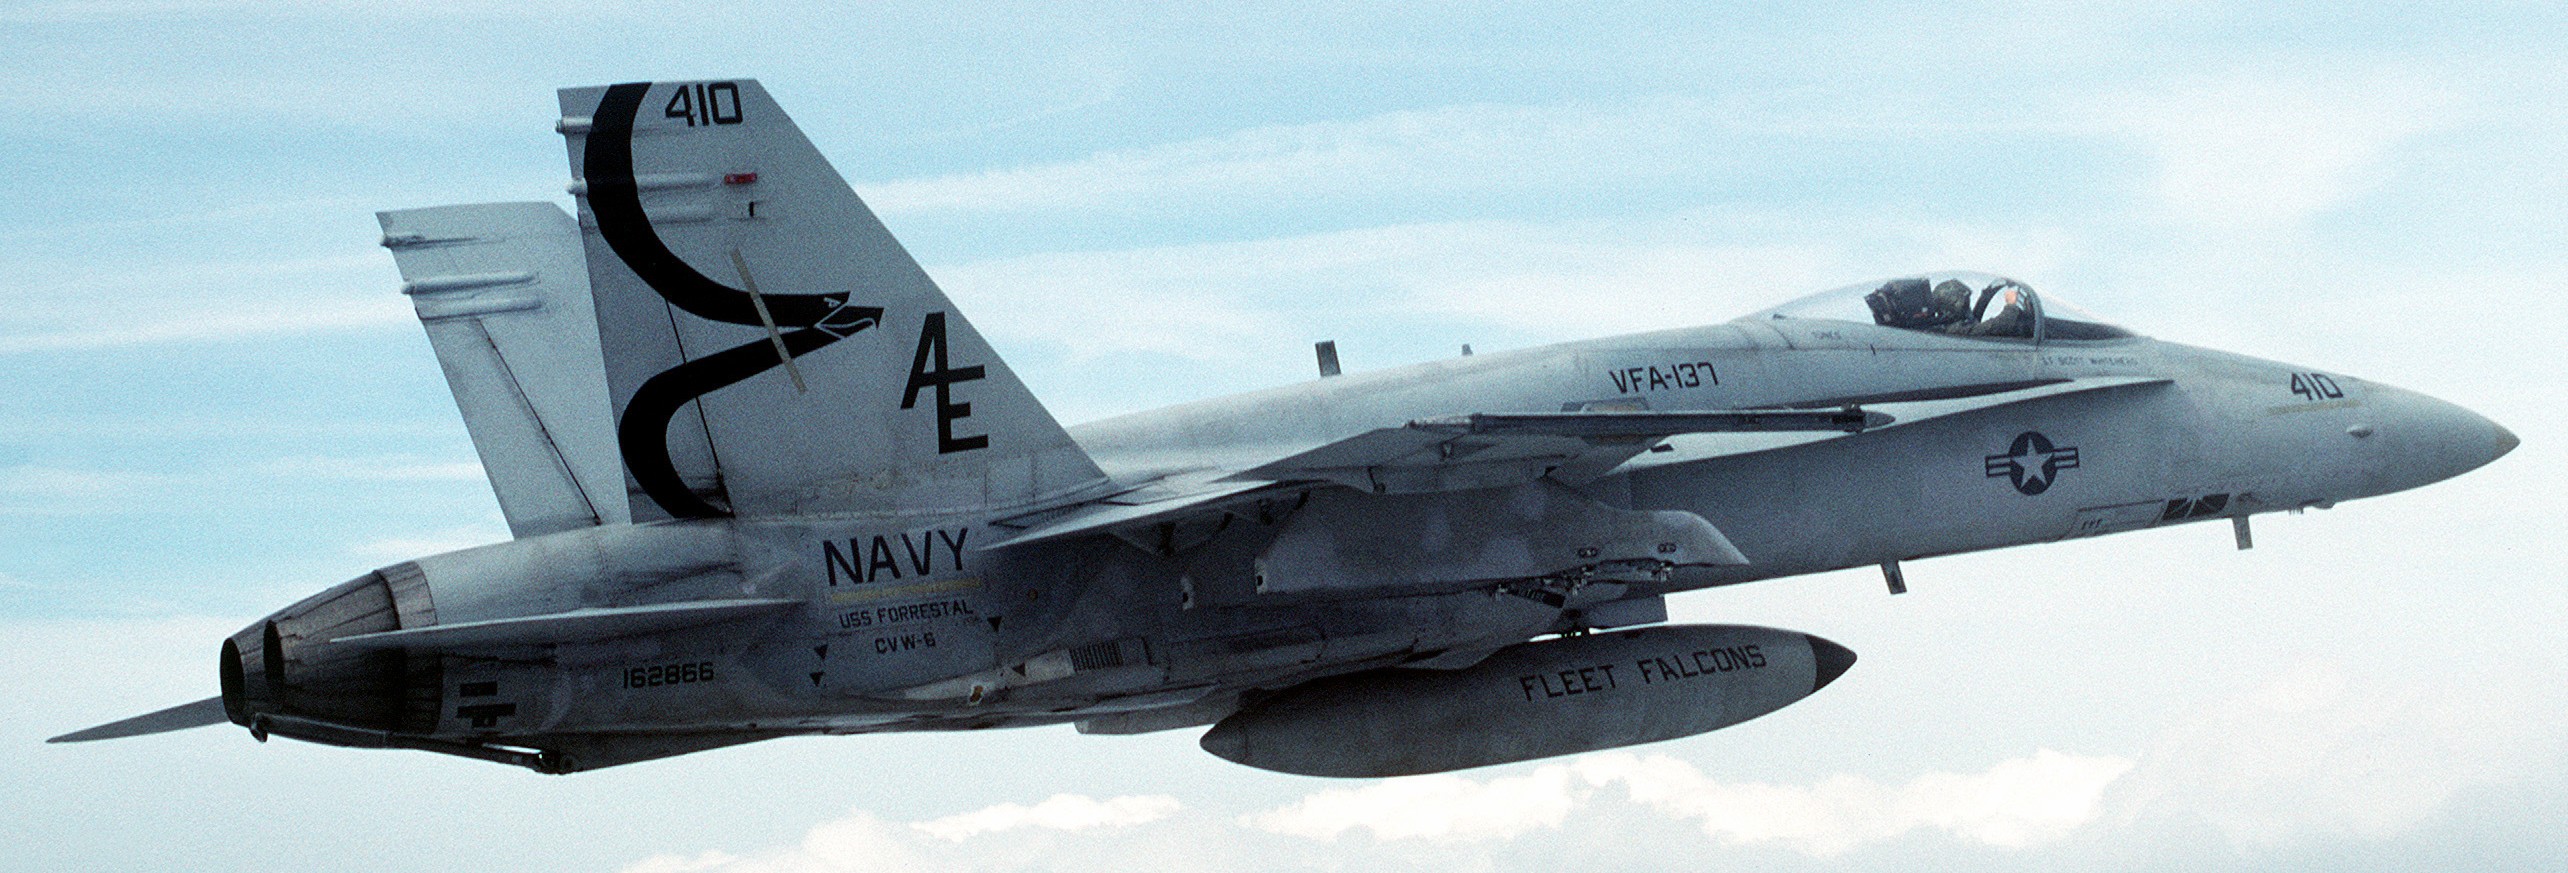 vfa-137 kestrels strike fighter squadron f/a-18a hornet cvw-6 1991 82